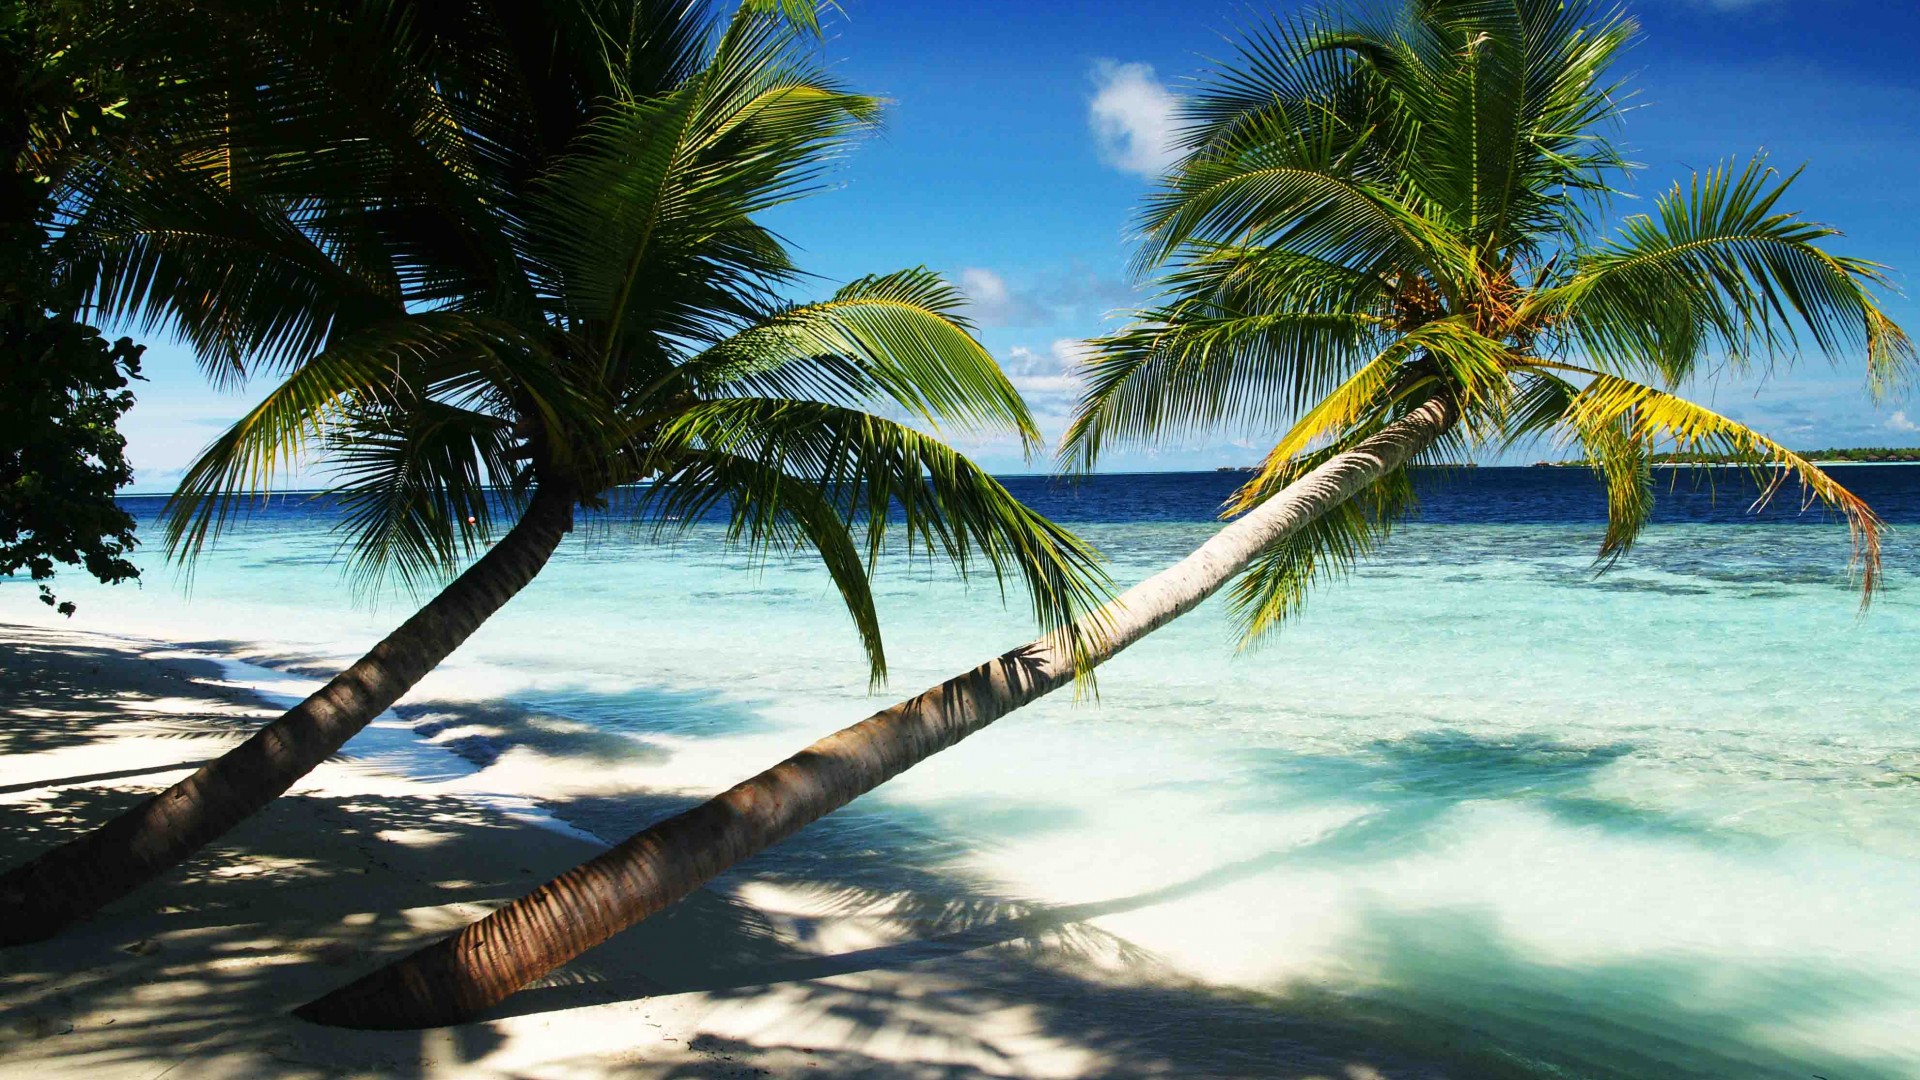 Maldives, 4k, 5k wallpaper, holidays, palms, paradise, vacation, travel, hotel, island, ocean, bungalow, beach, sky (horizontal)